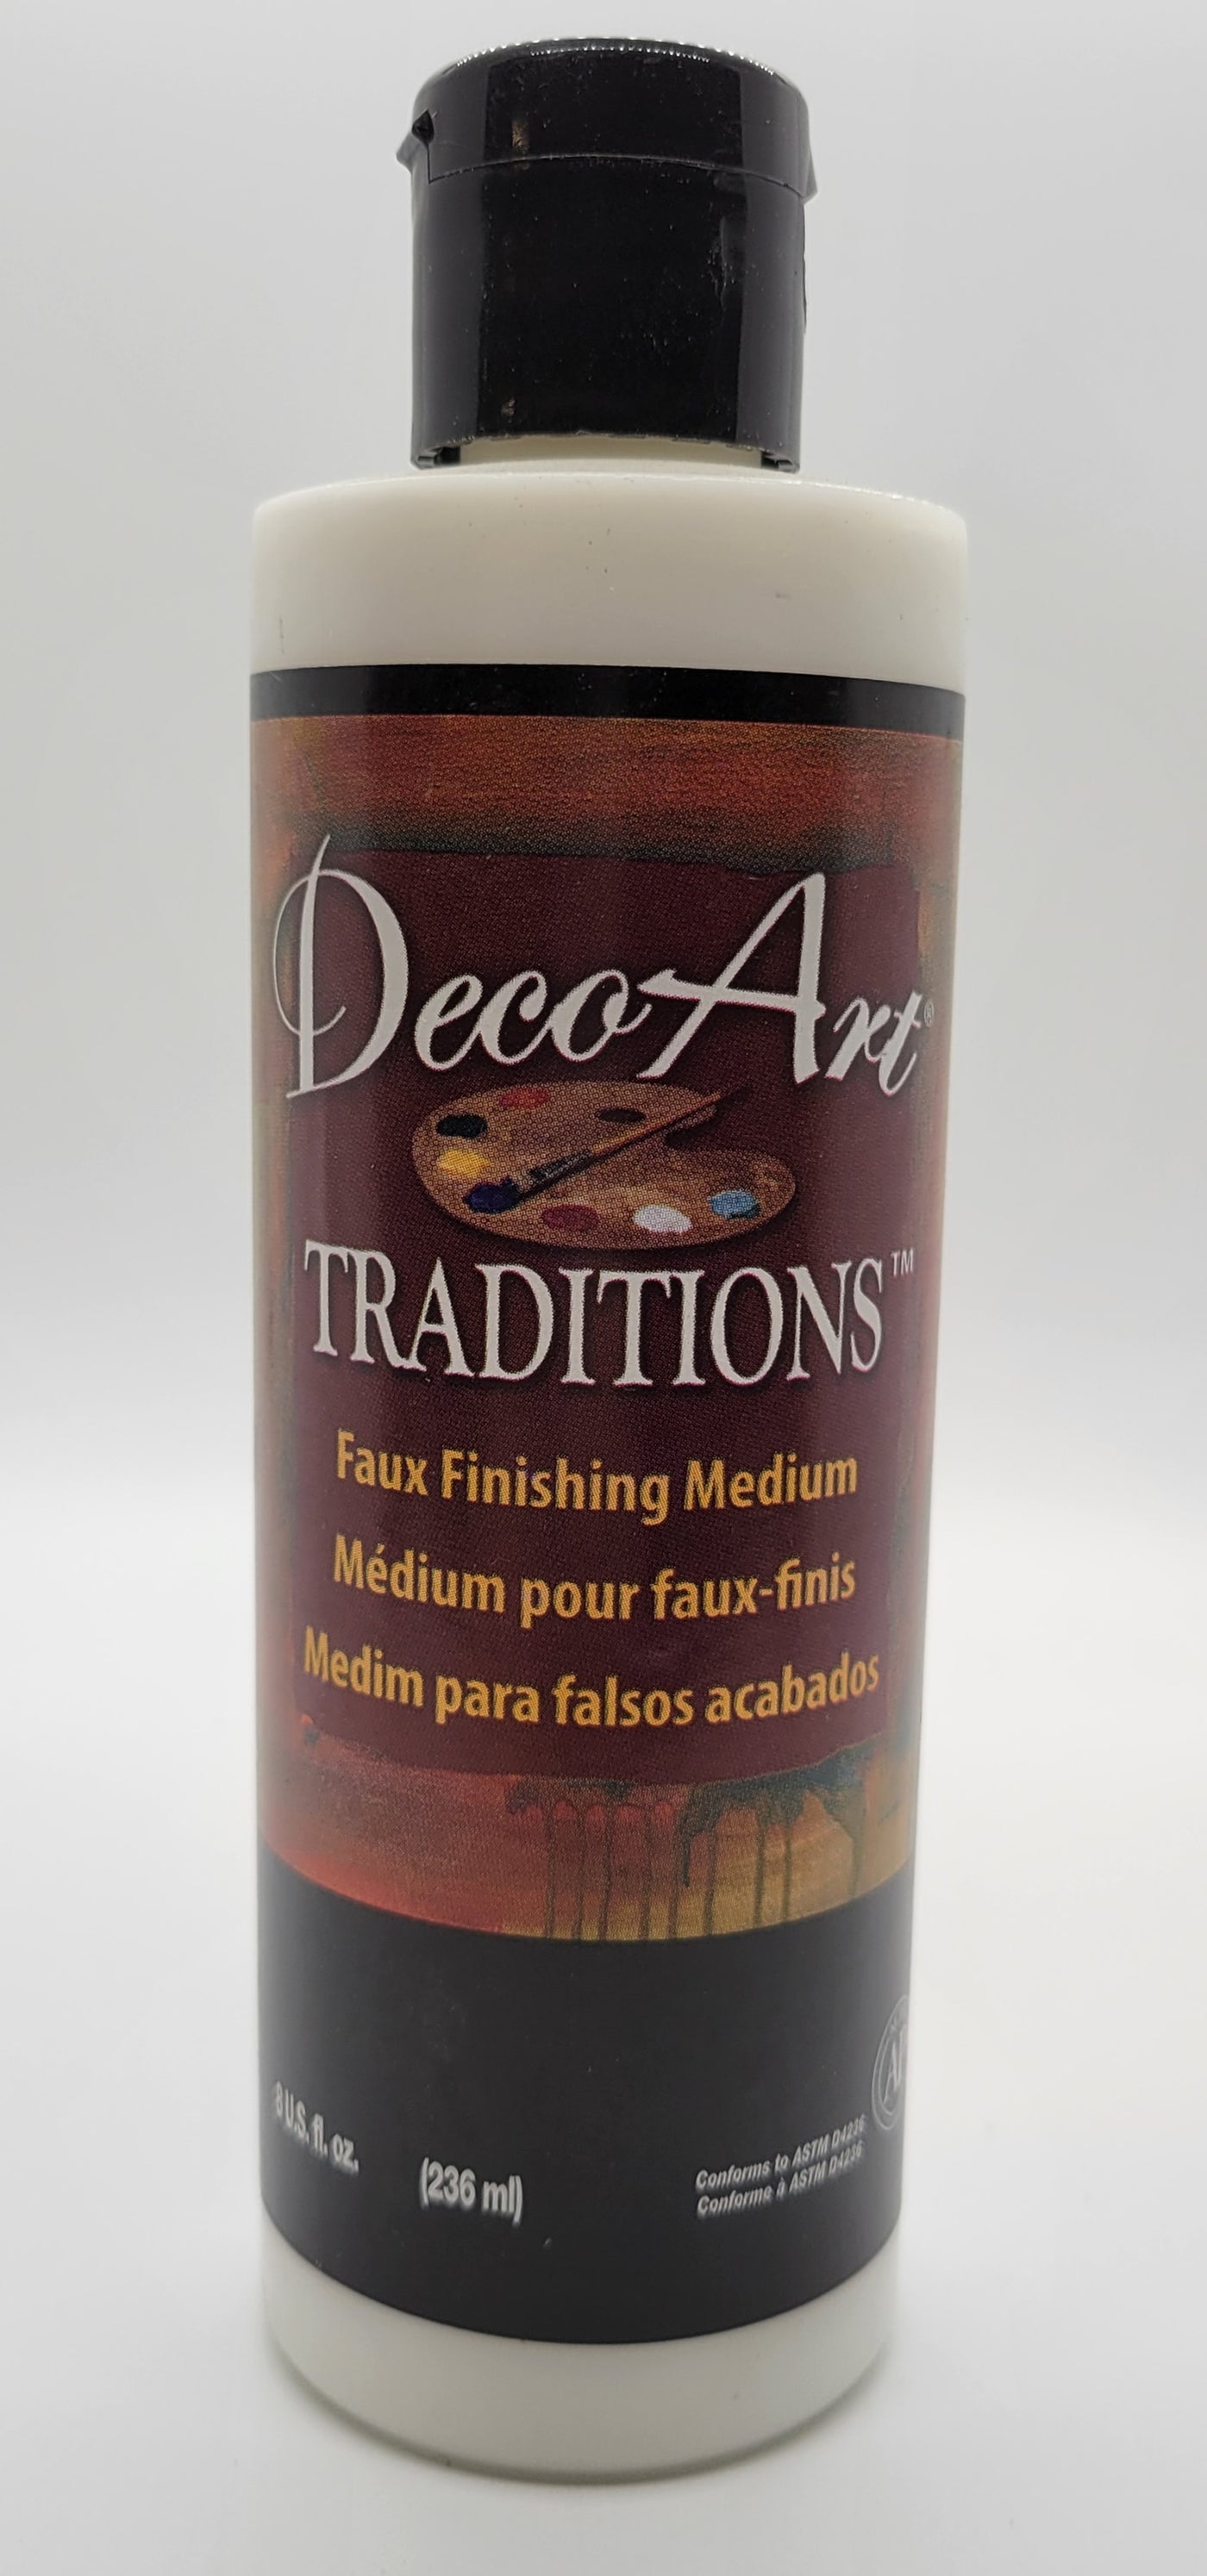 DecoArt Media Fluid Acrylics - DecoArt Acrylic Paint and Art Supplies